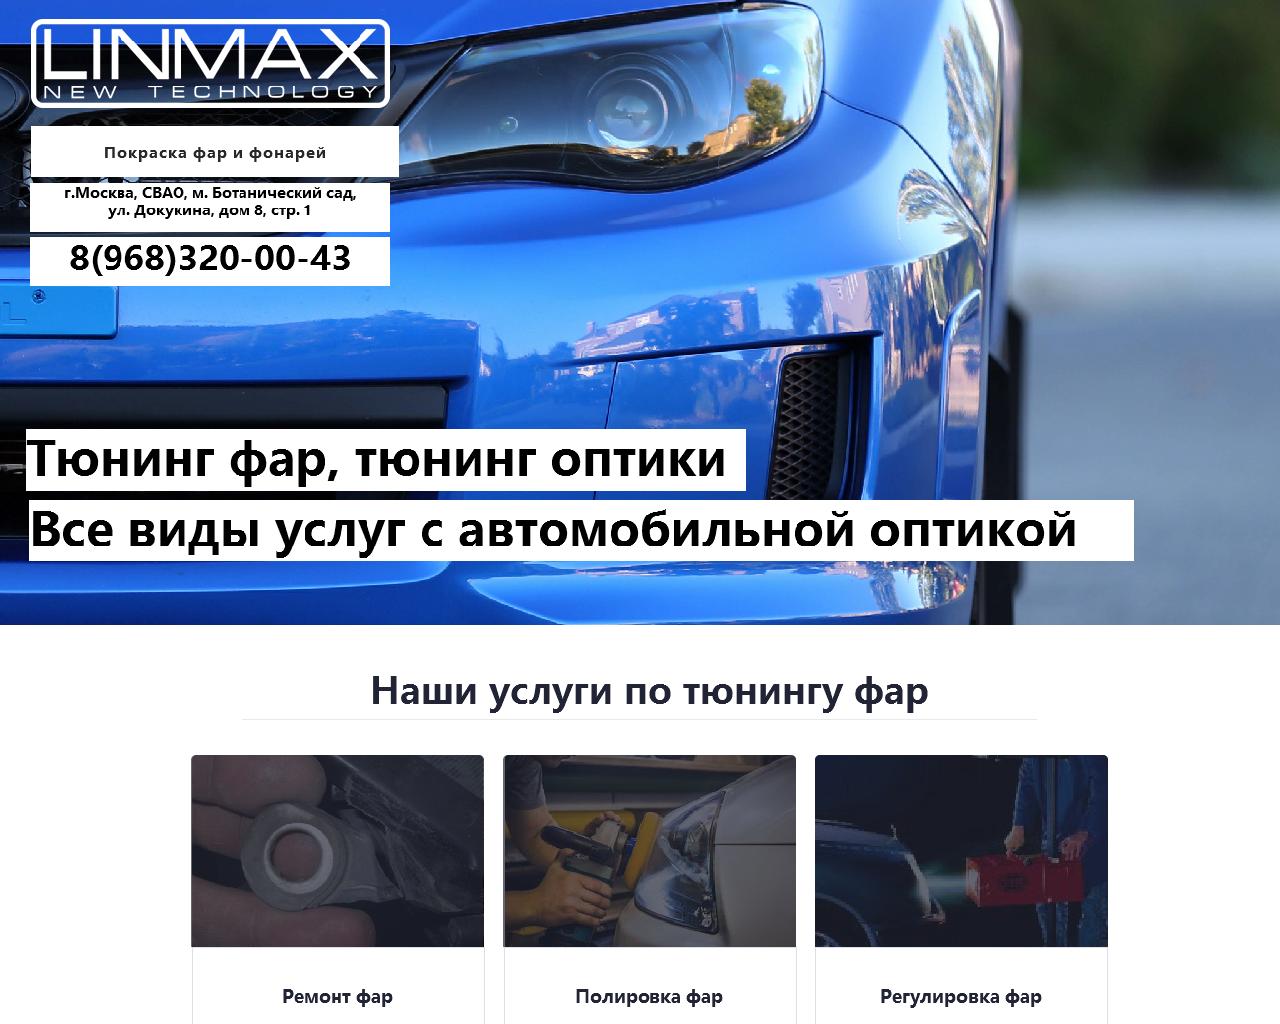 Изображение сайта linmax.ru в разрешении 1280x1024